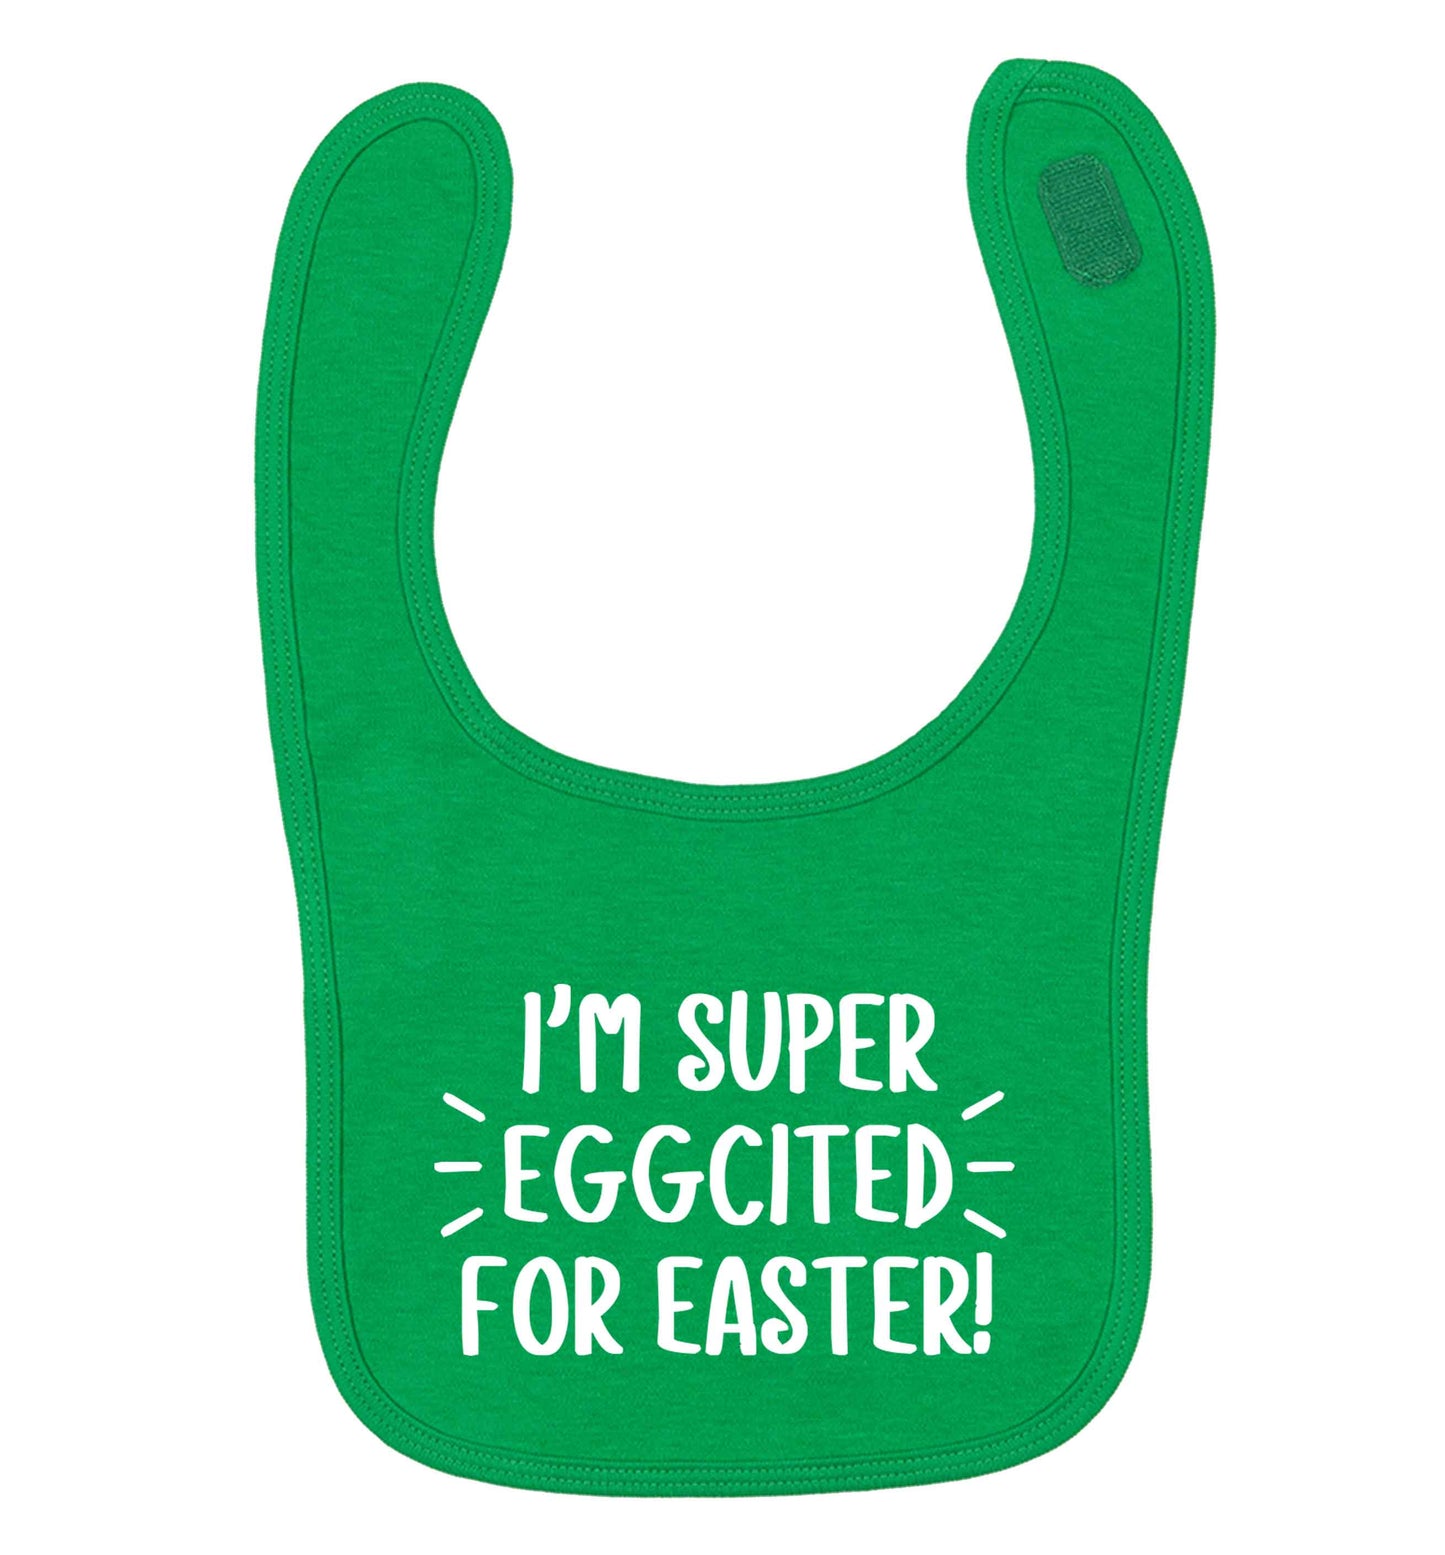 I'm super eggcited for Easter green baby bib